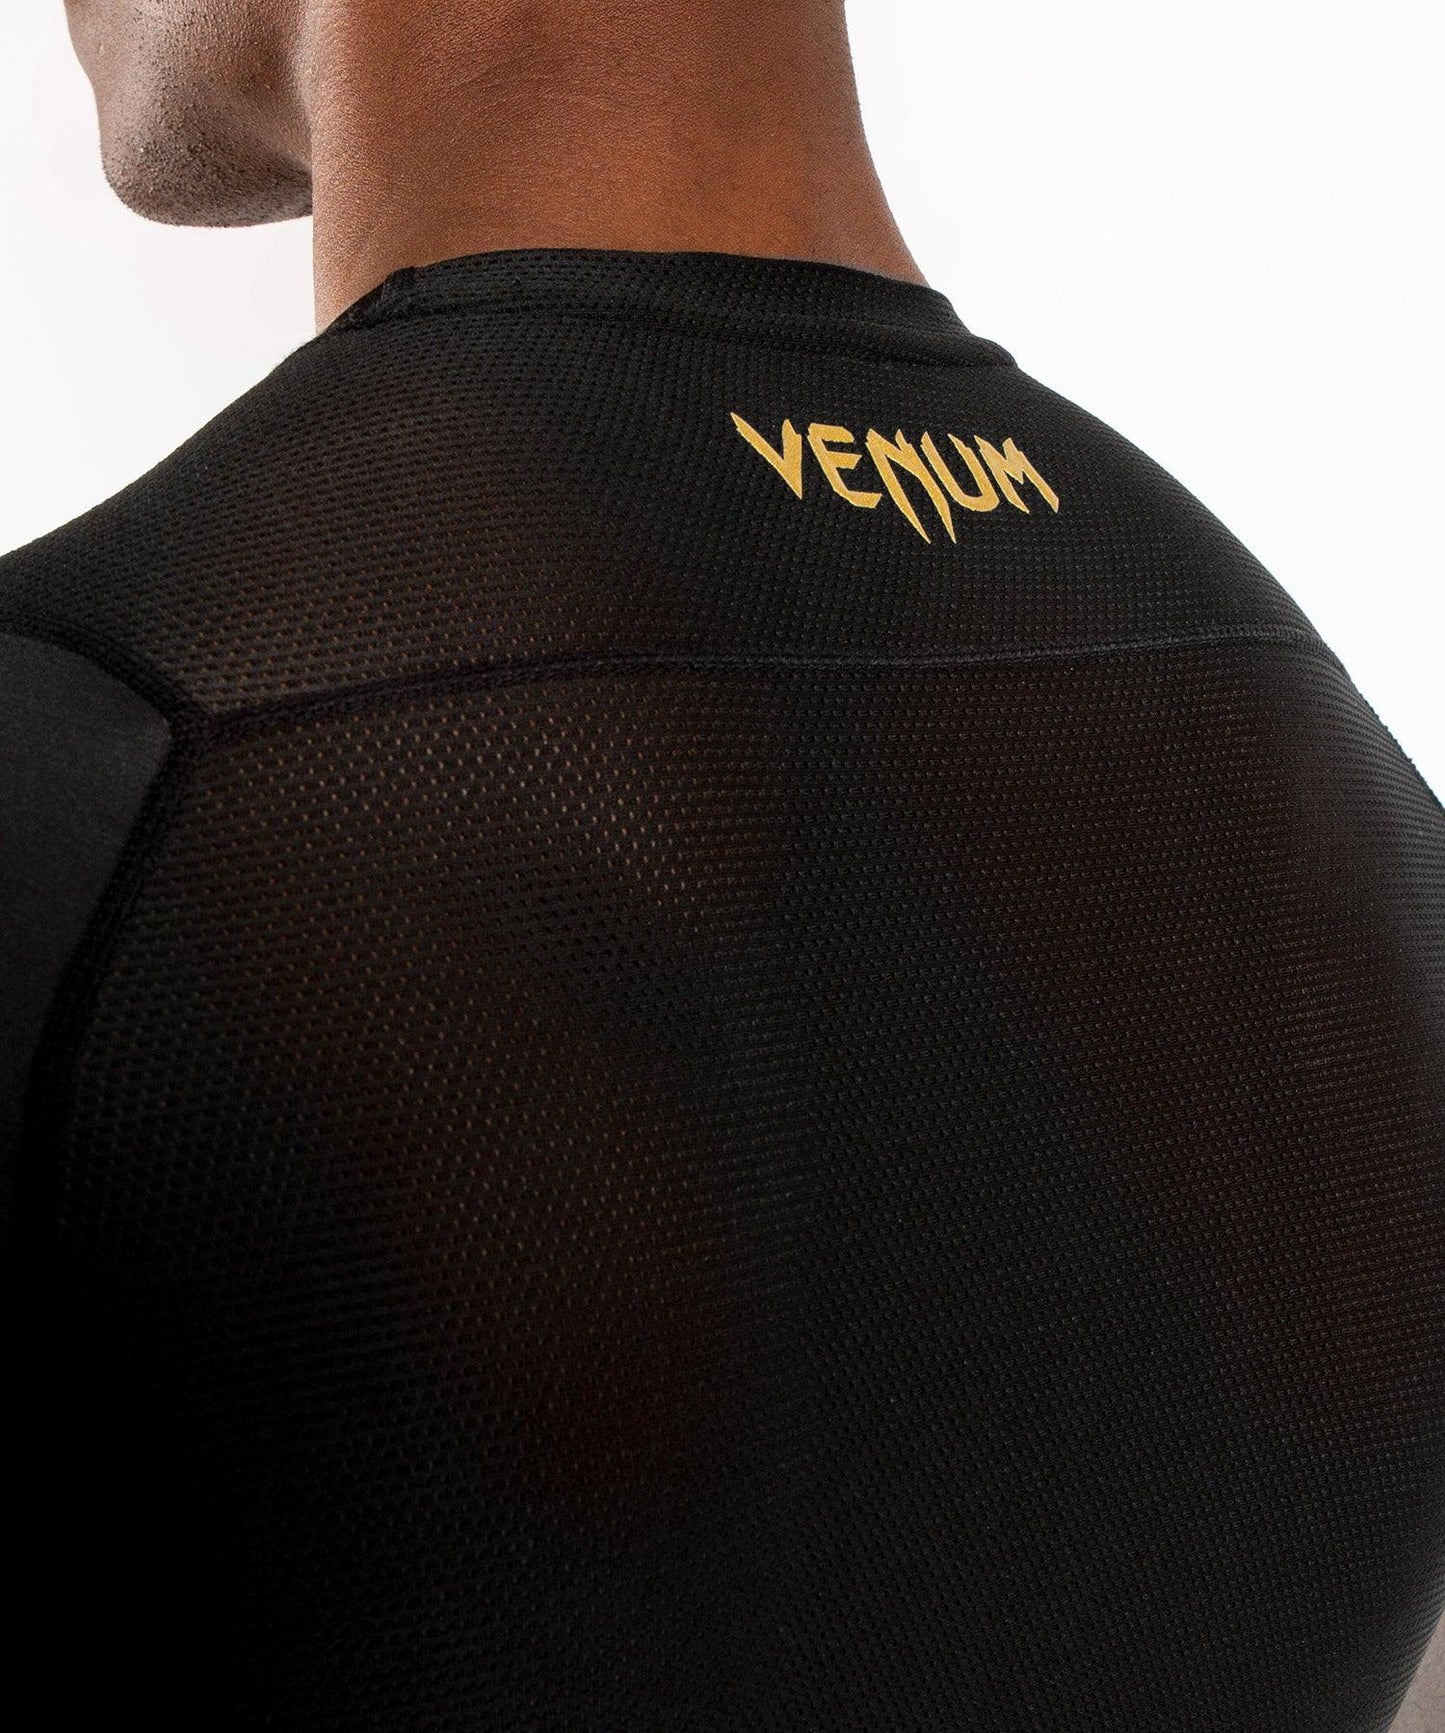 Venum G-Fit Rashguard - Short Sleeves - Black/Gold Picture 5